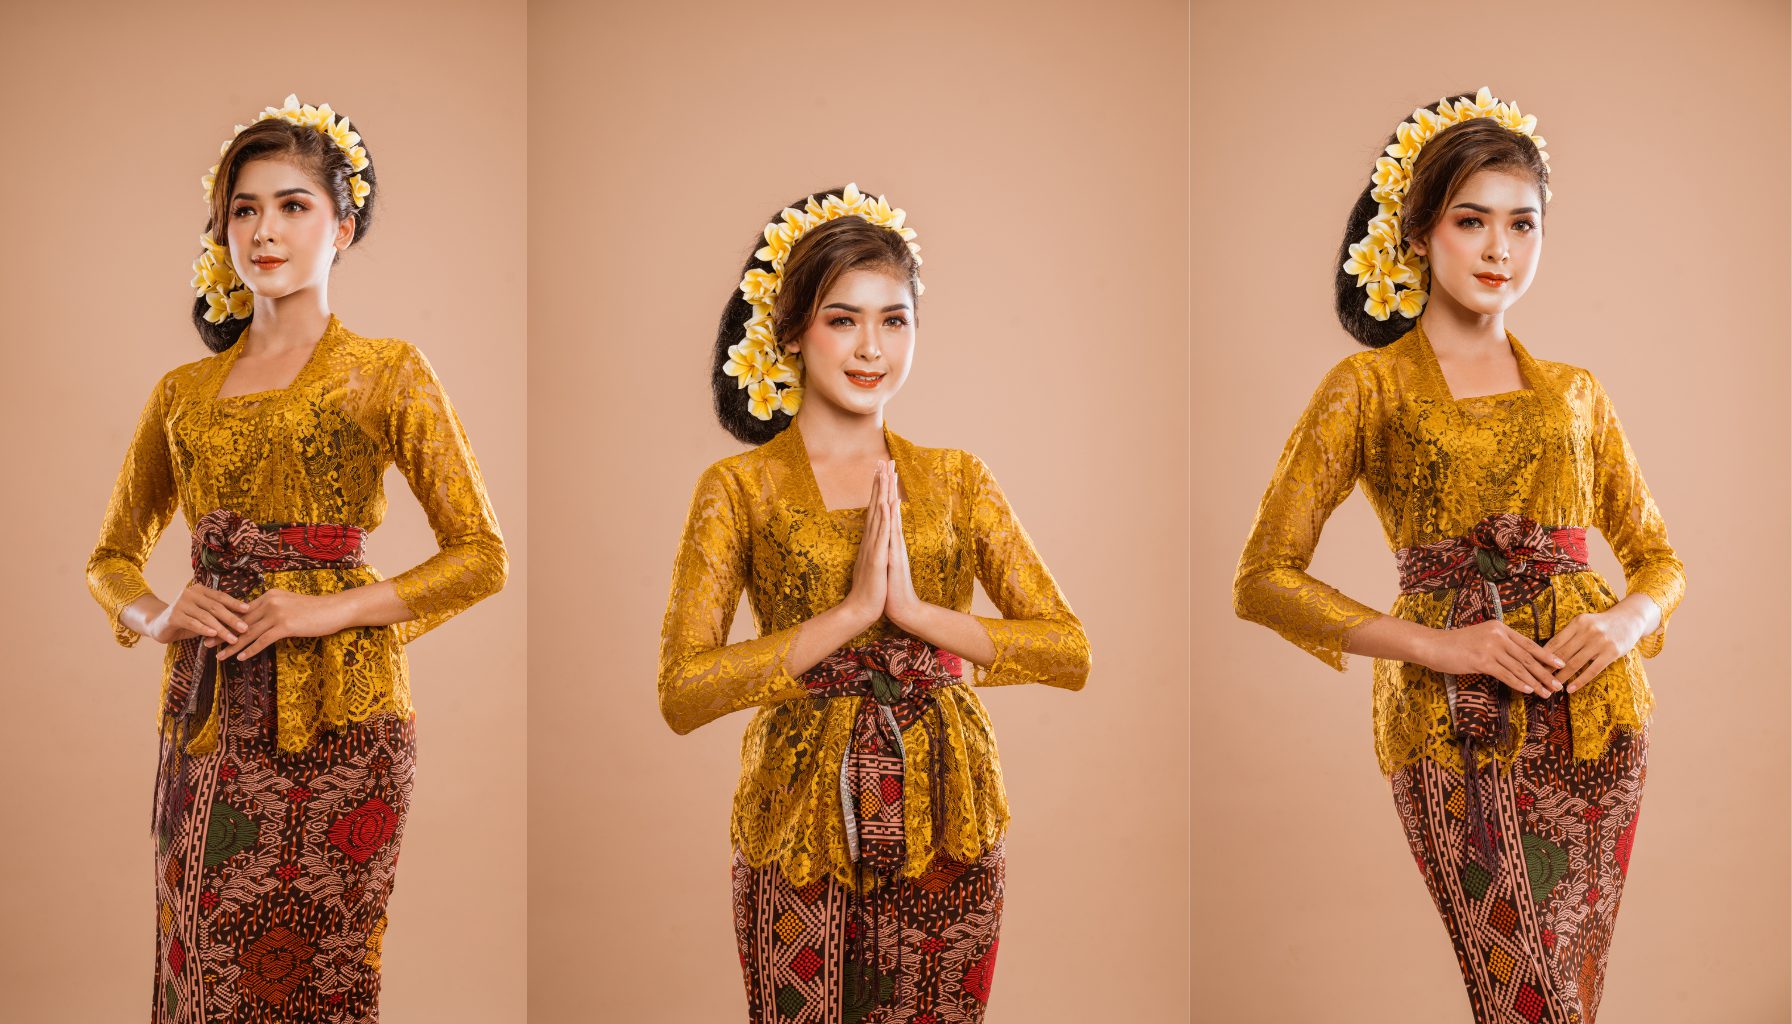 Contoh Pemakaian Baju Adat Bali Wanita Beserta Kelengkapannya